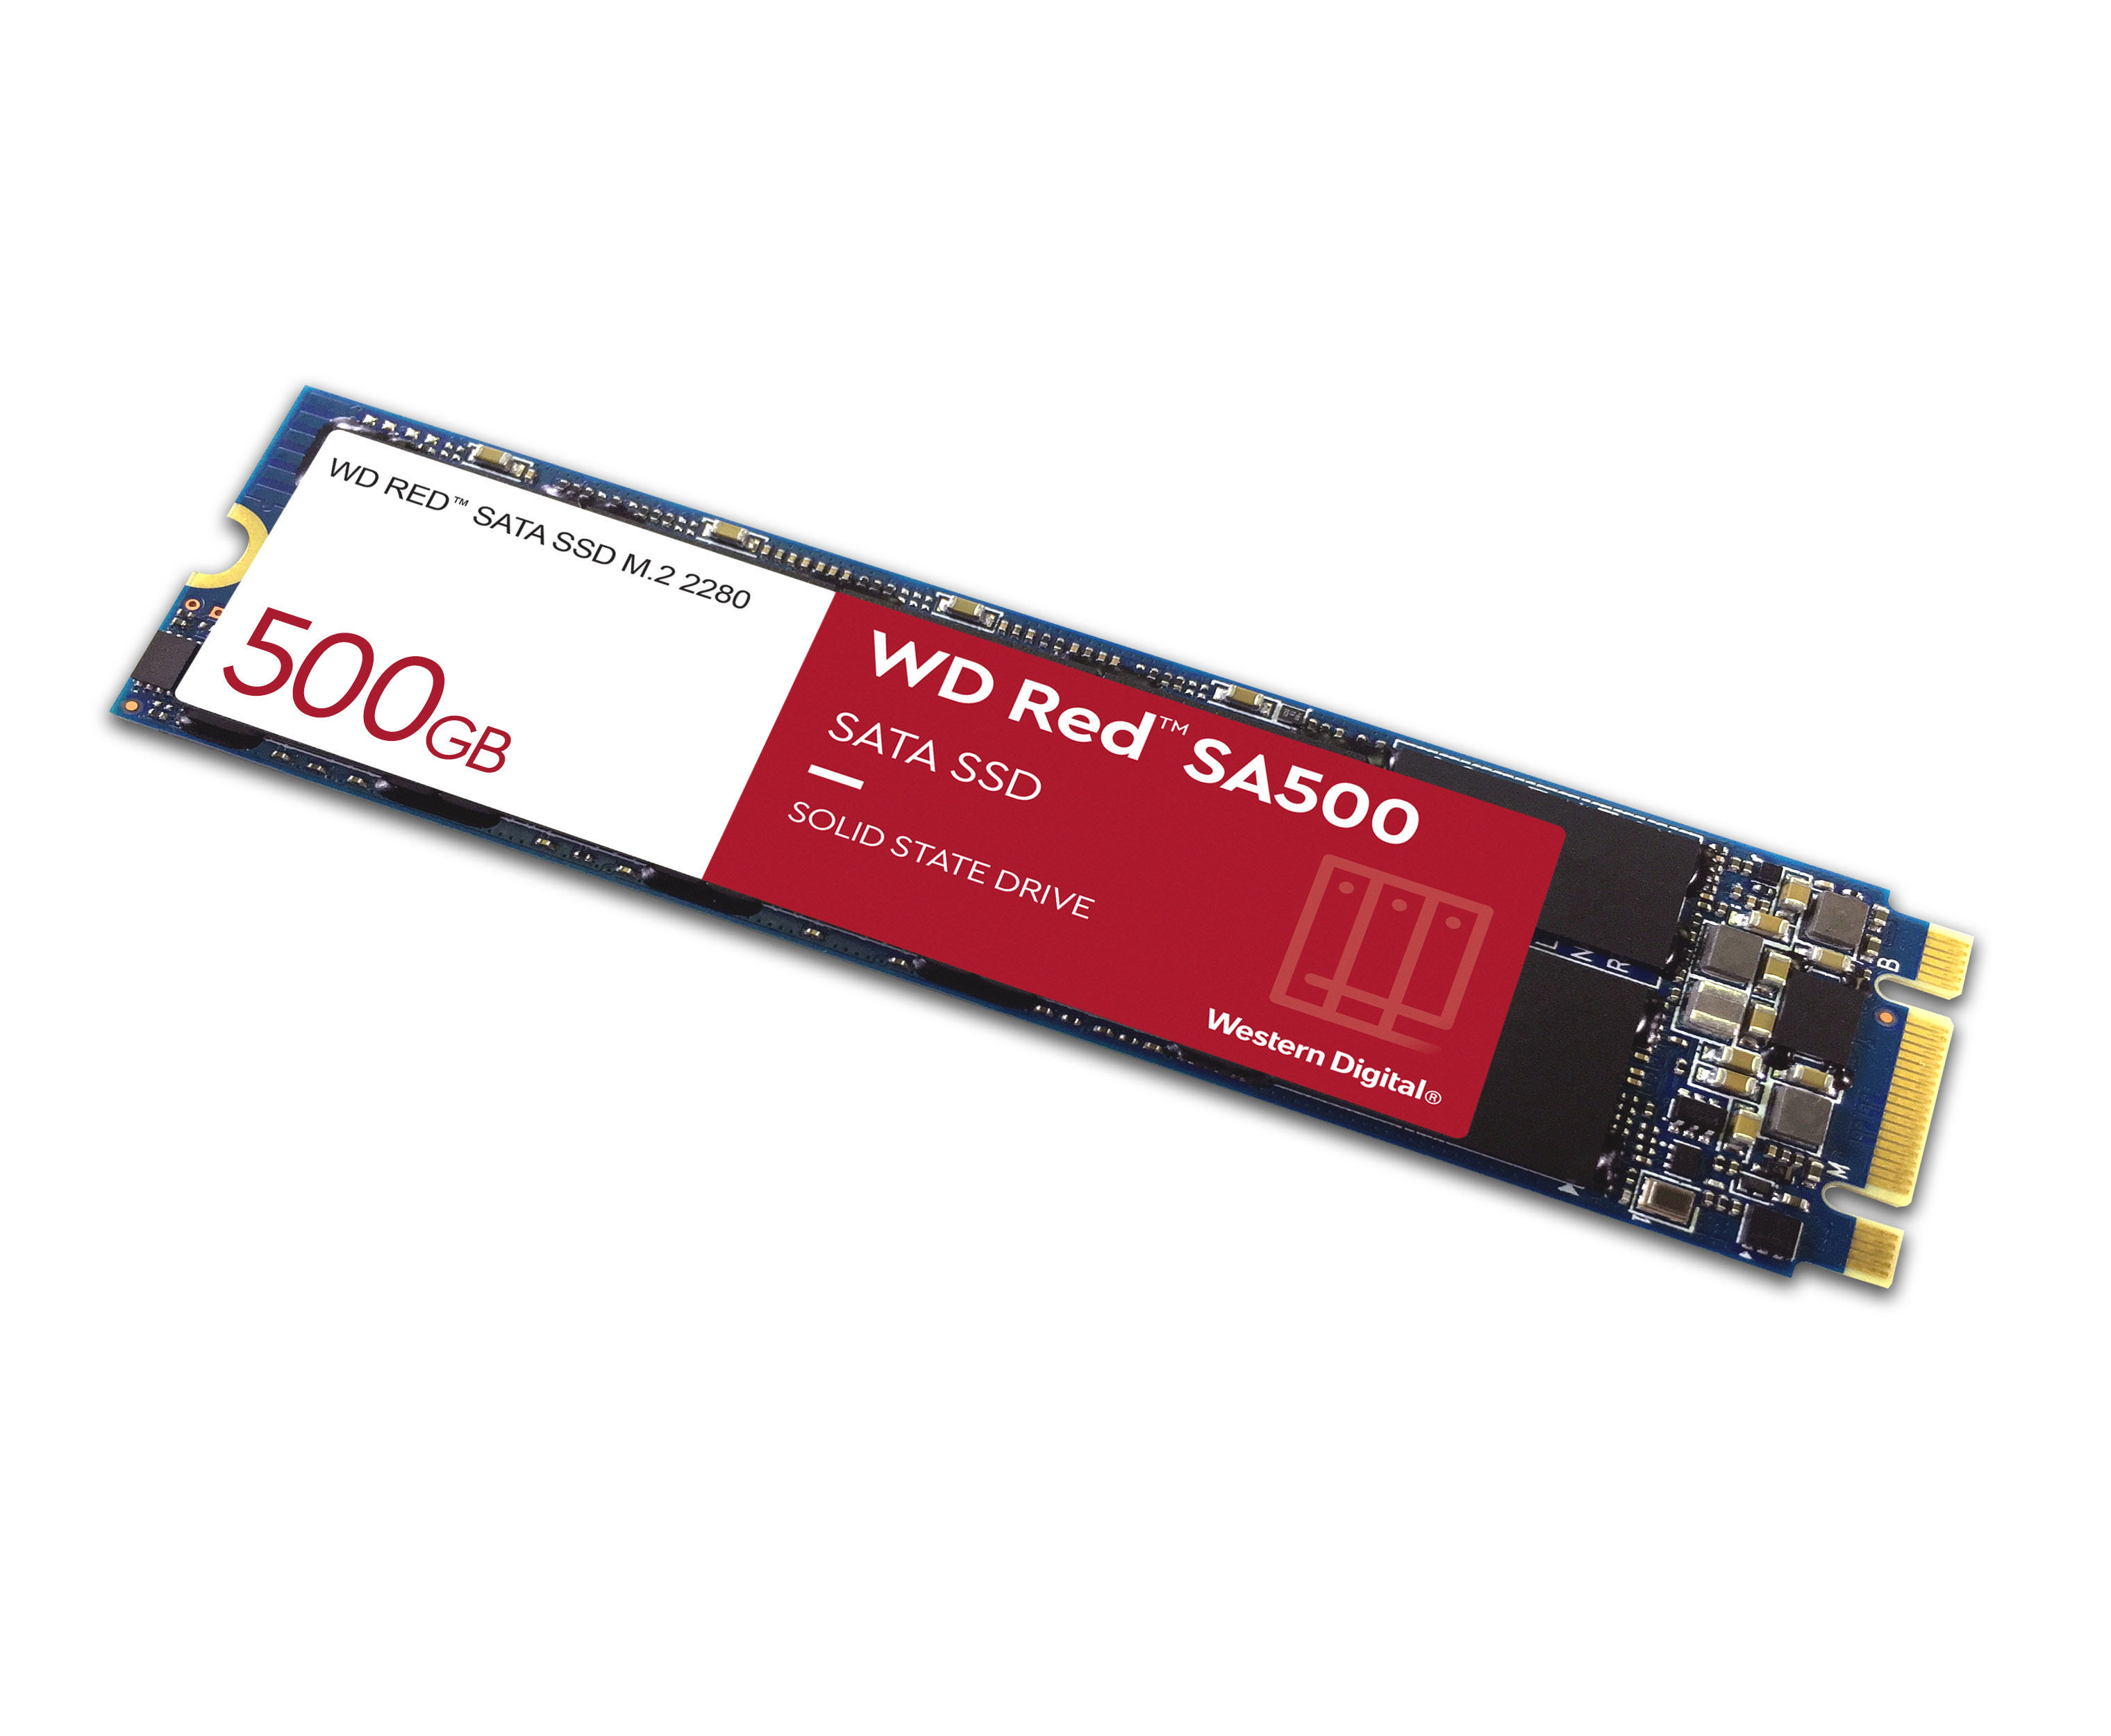 SSD Red™ WD Retail, intern 500 GB SA500 via SATA, Speicher M.2